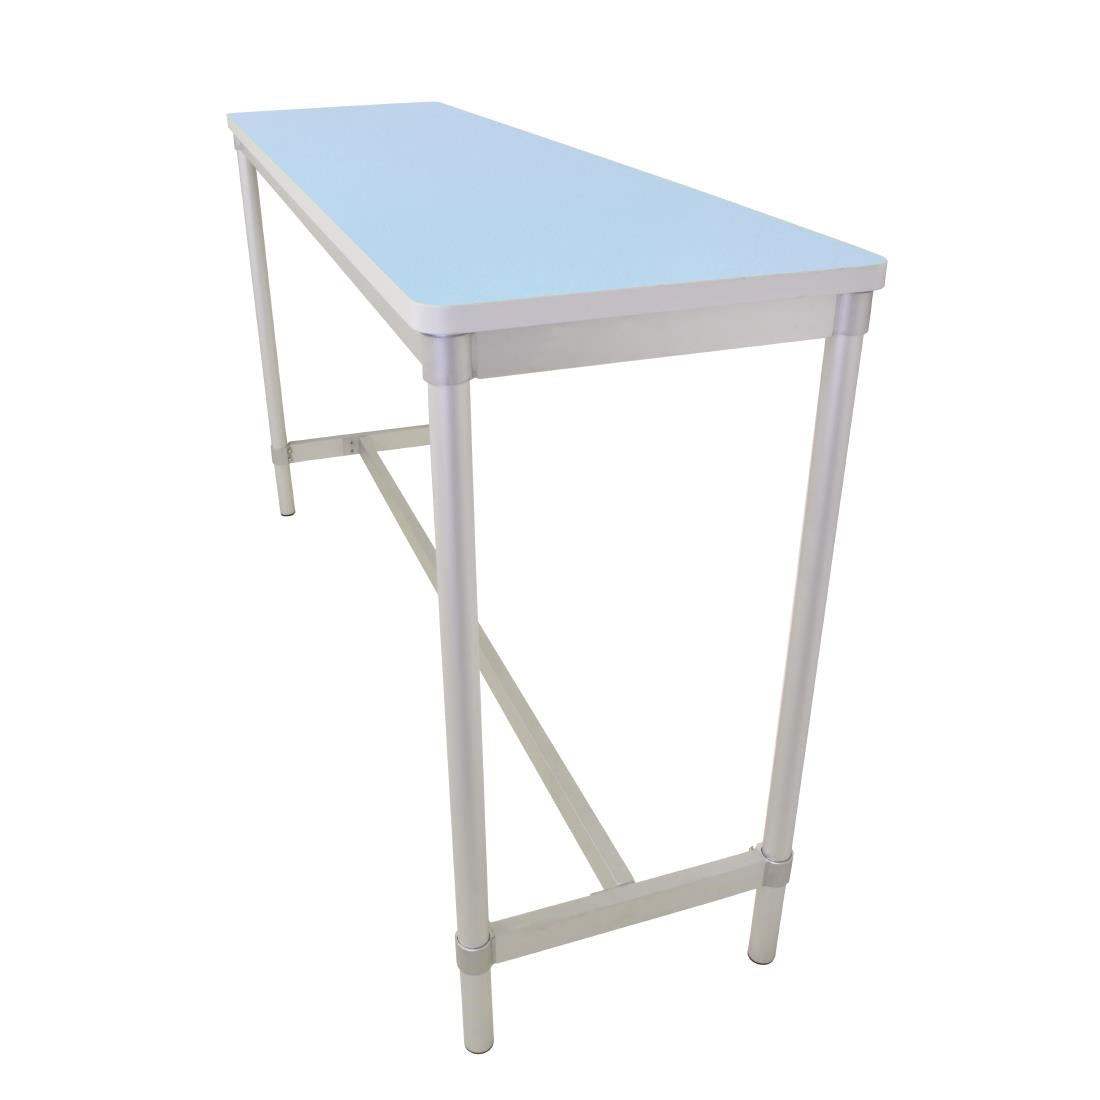 DG131-PB Gopak Enviro Indoor Pastel Blue Rectangle Poseur Table 1200mm JD Catering Equipment Solutions Ltd